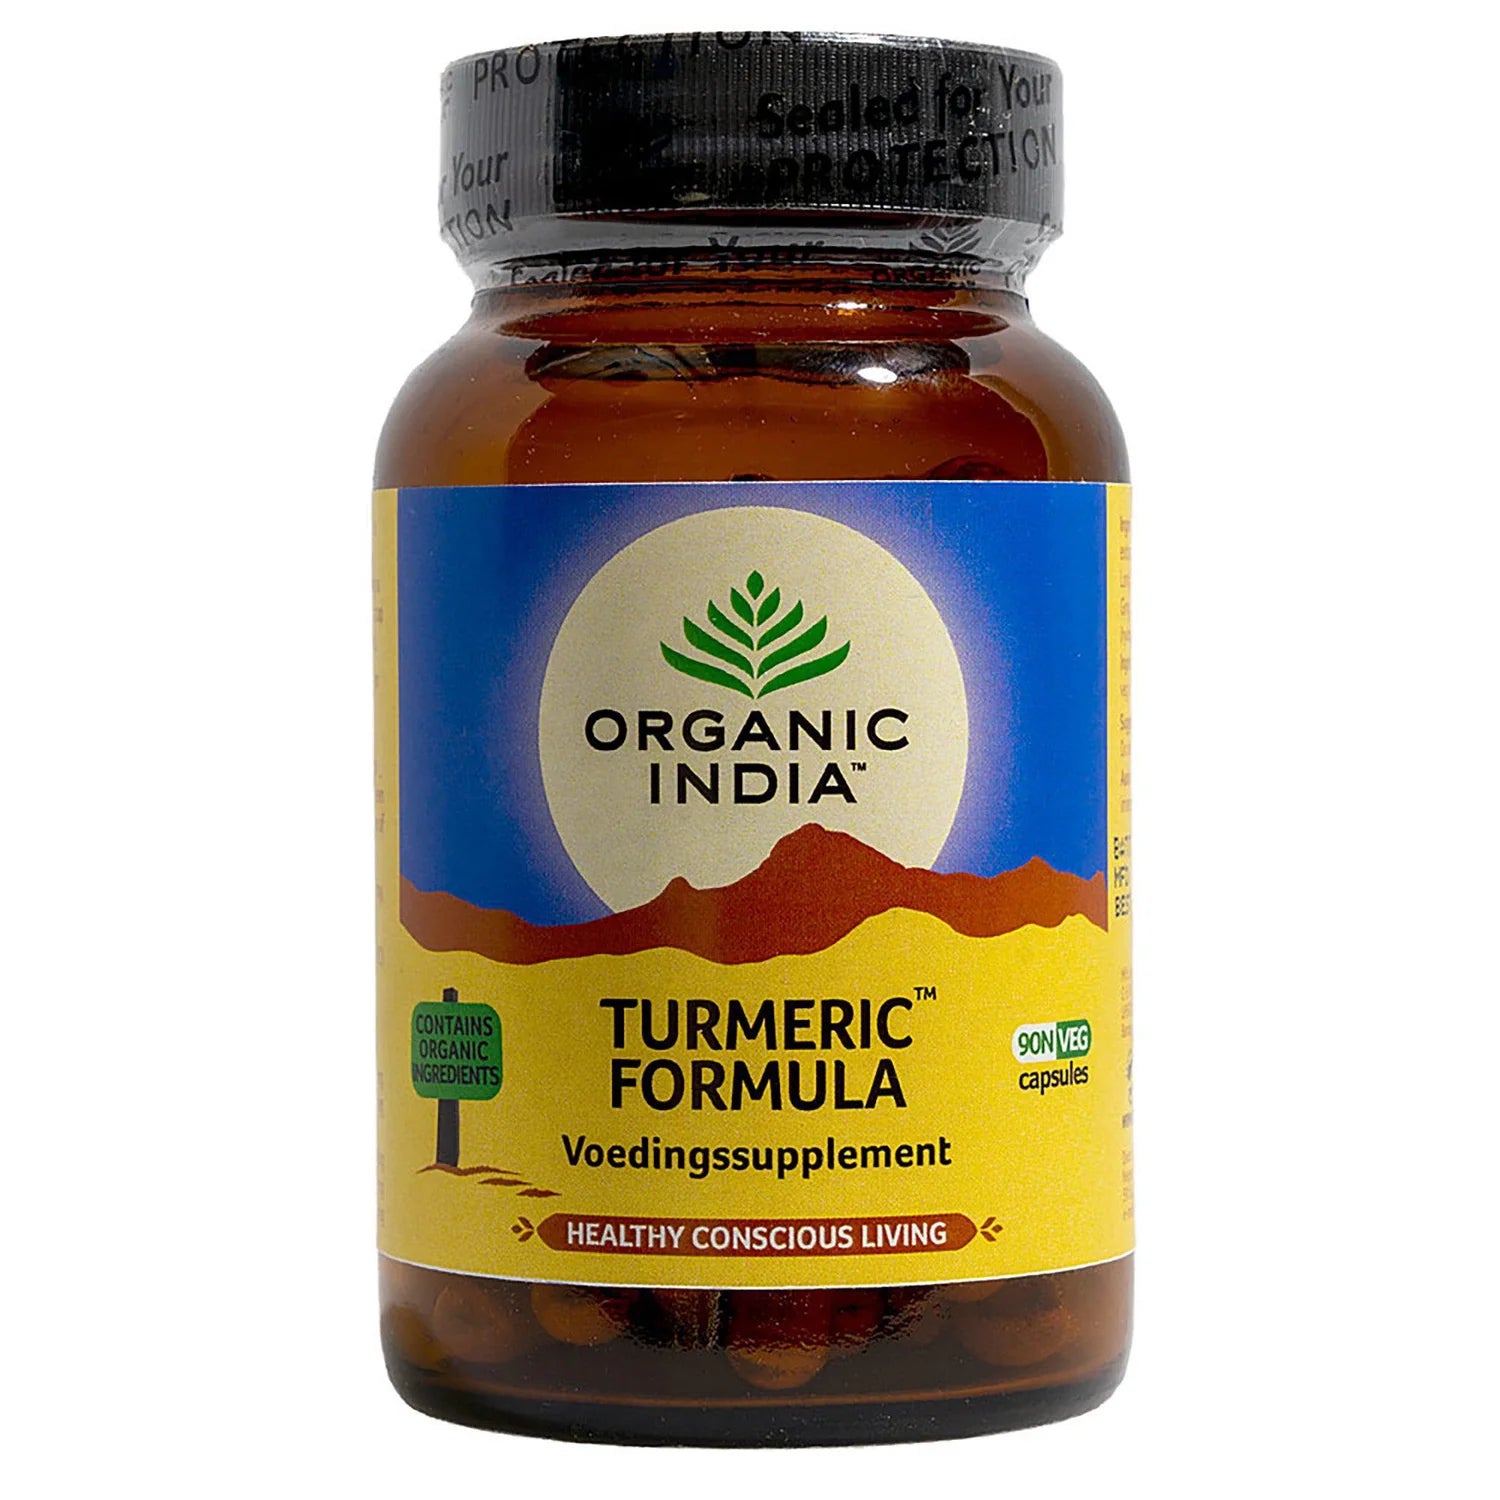 Organic India turmeric formula capsules